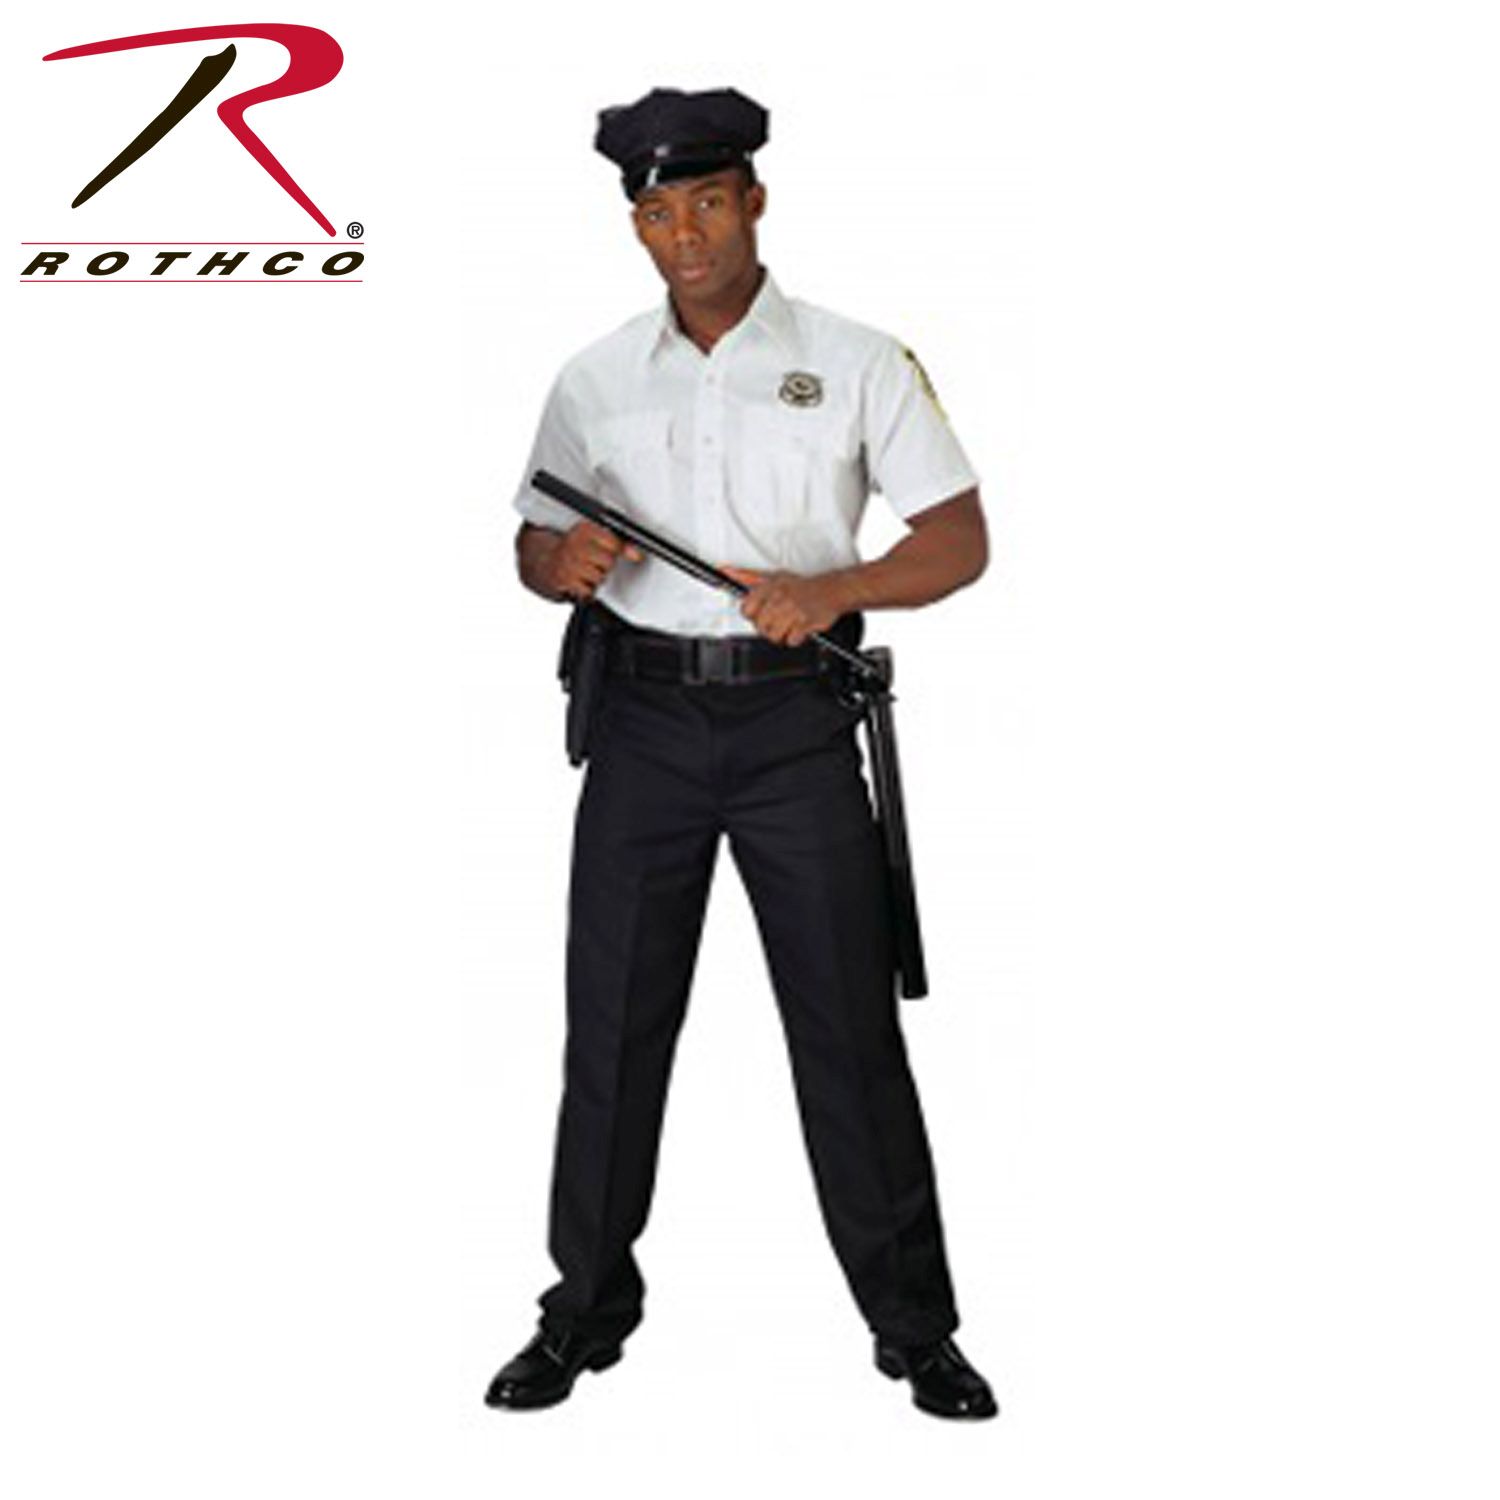 Buy 30016_Rothco Short Sleeve Uniform Shirt for Law Enforcement ...